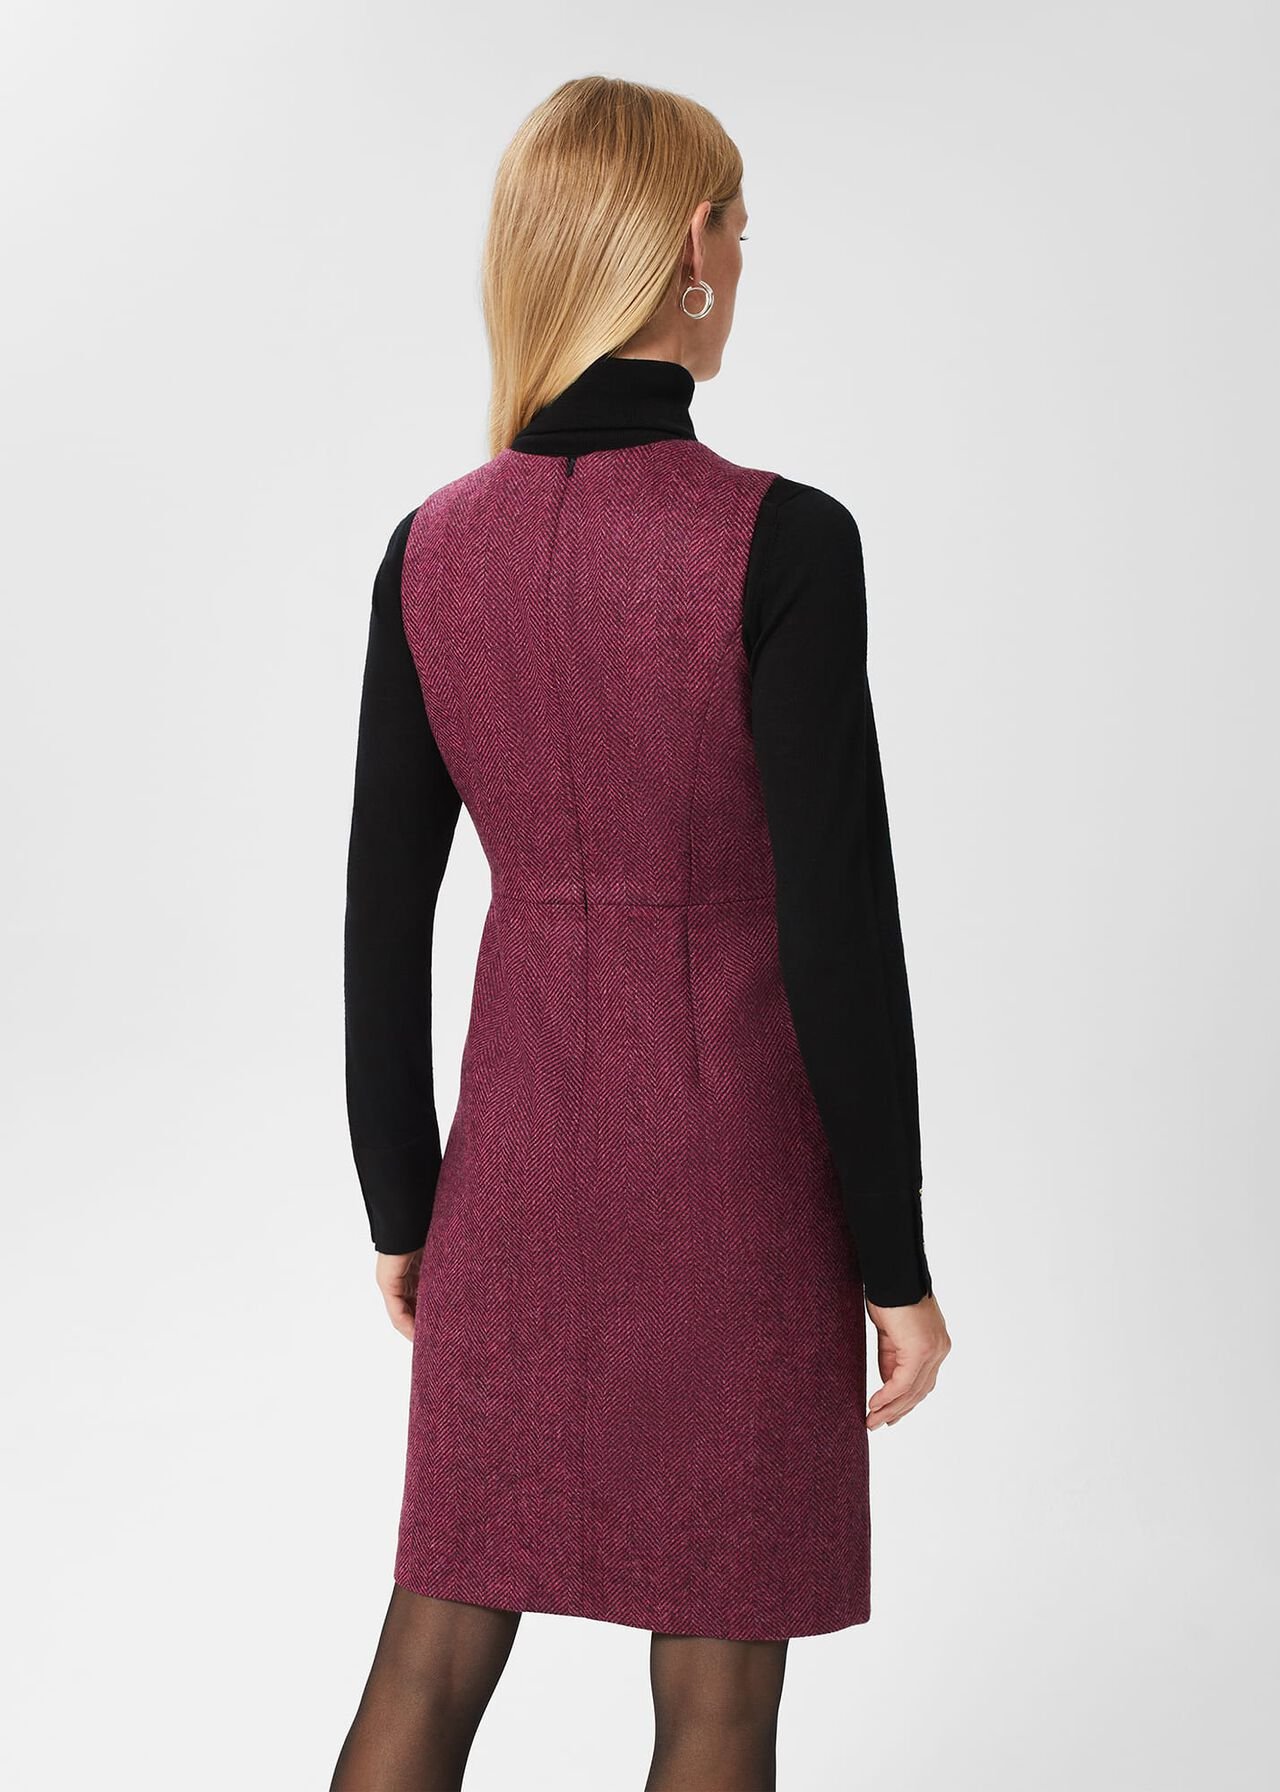 Lucia Wool Dress, Purple Multi, hi-res